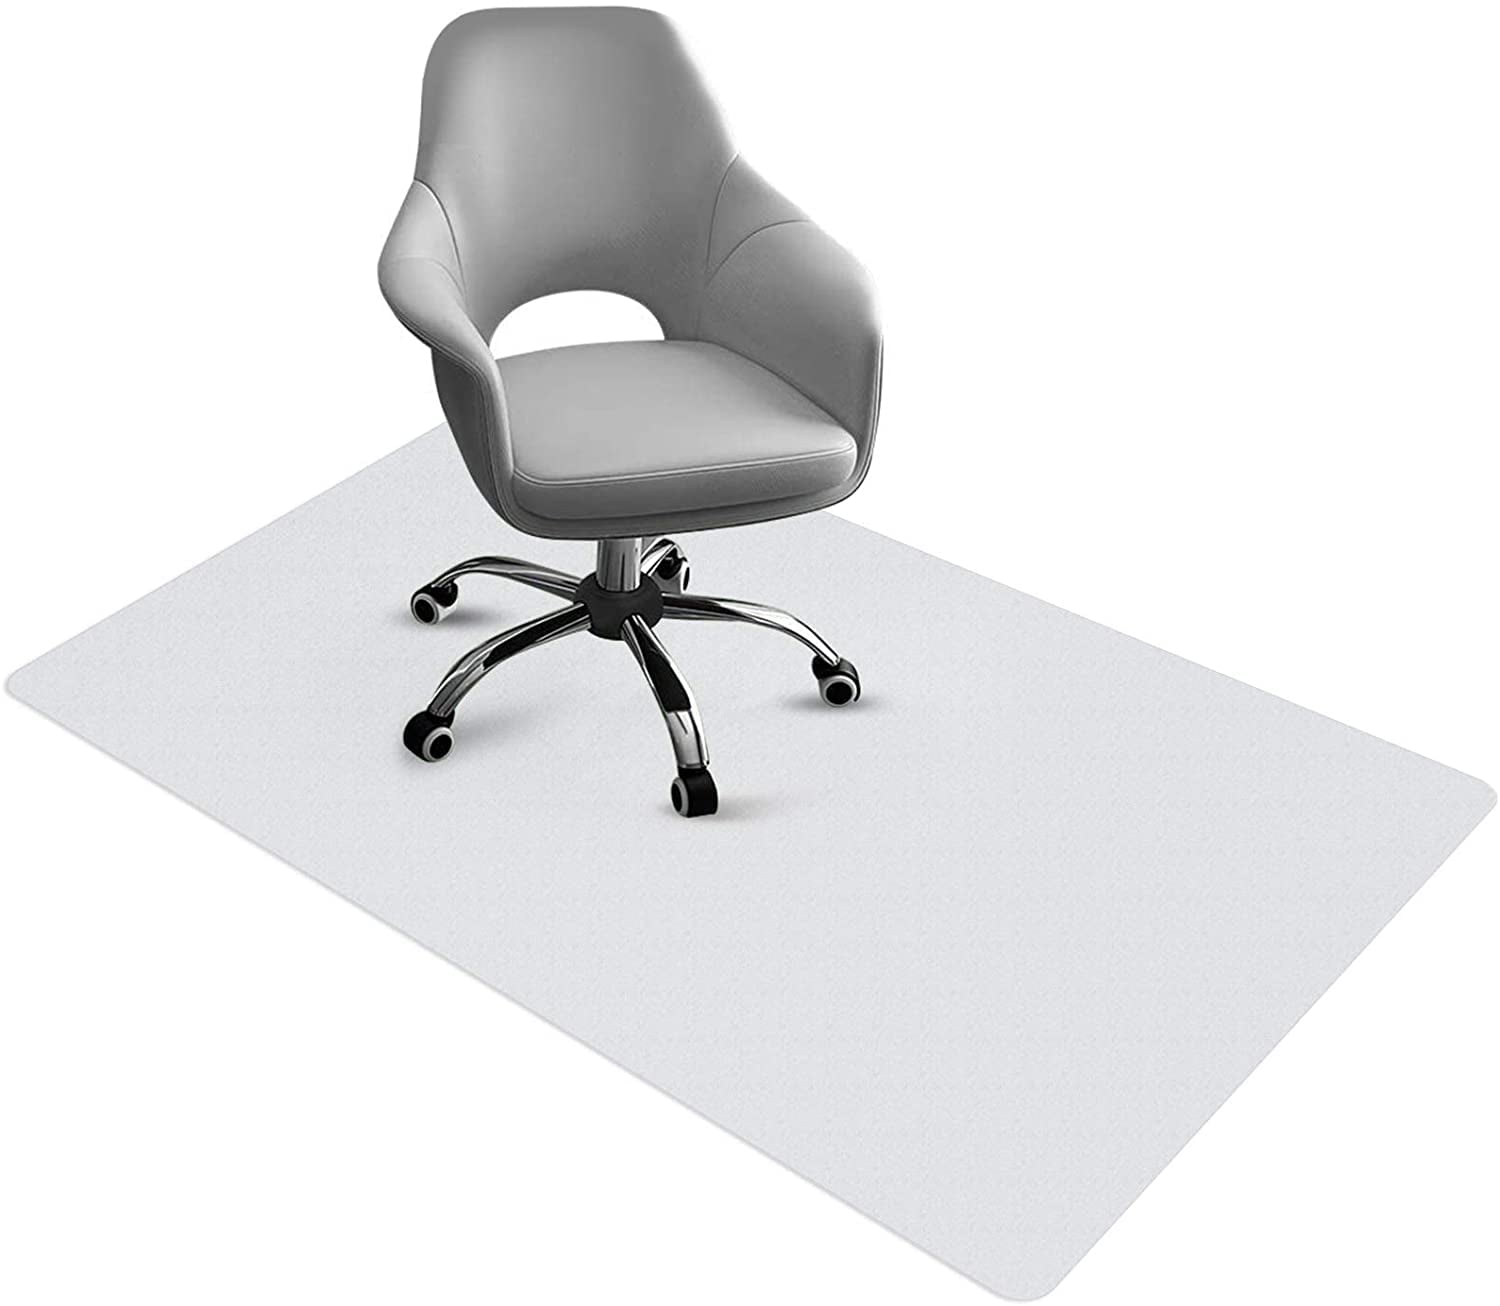 Durable PVC Mat Home Office Carpet Protector Desk Floor Chair Tranparent 2.5mm 